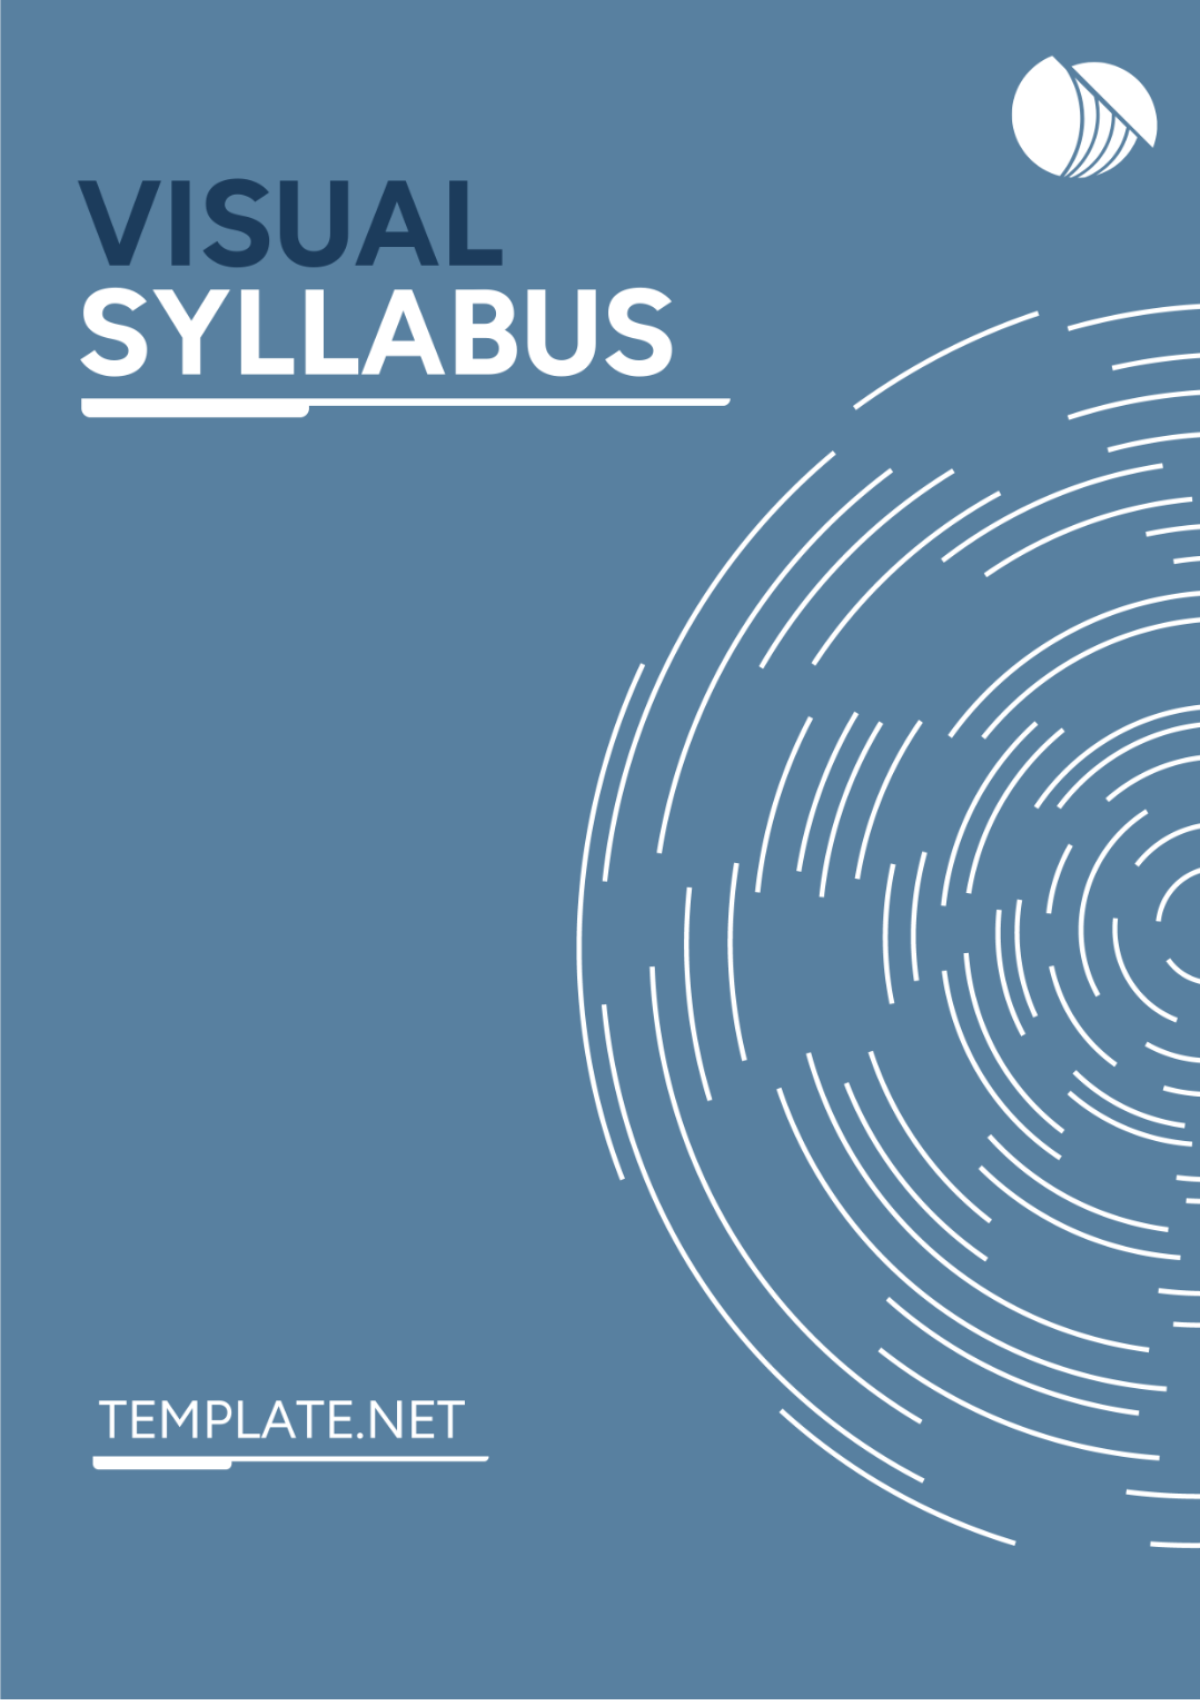 Visual Syllabus Template